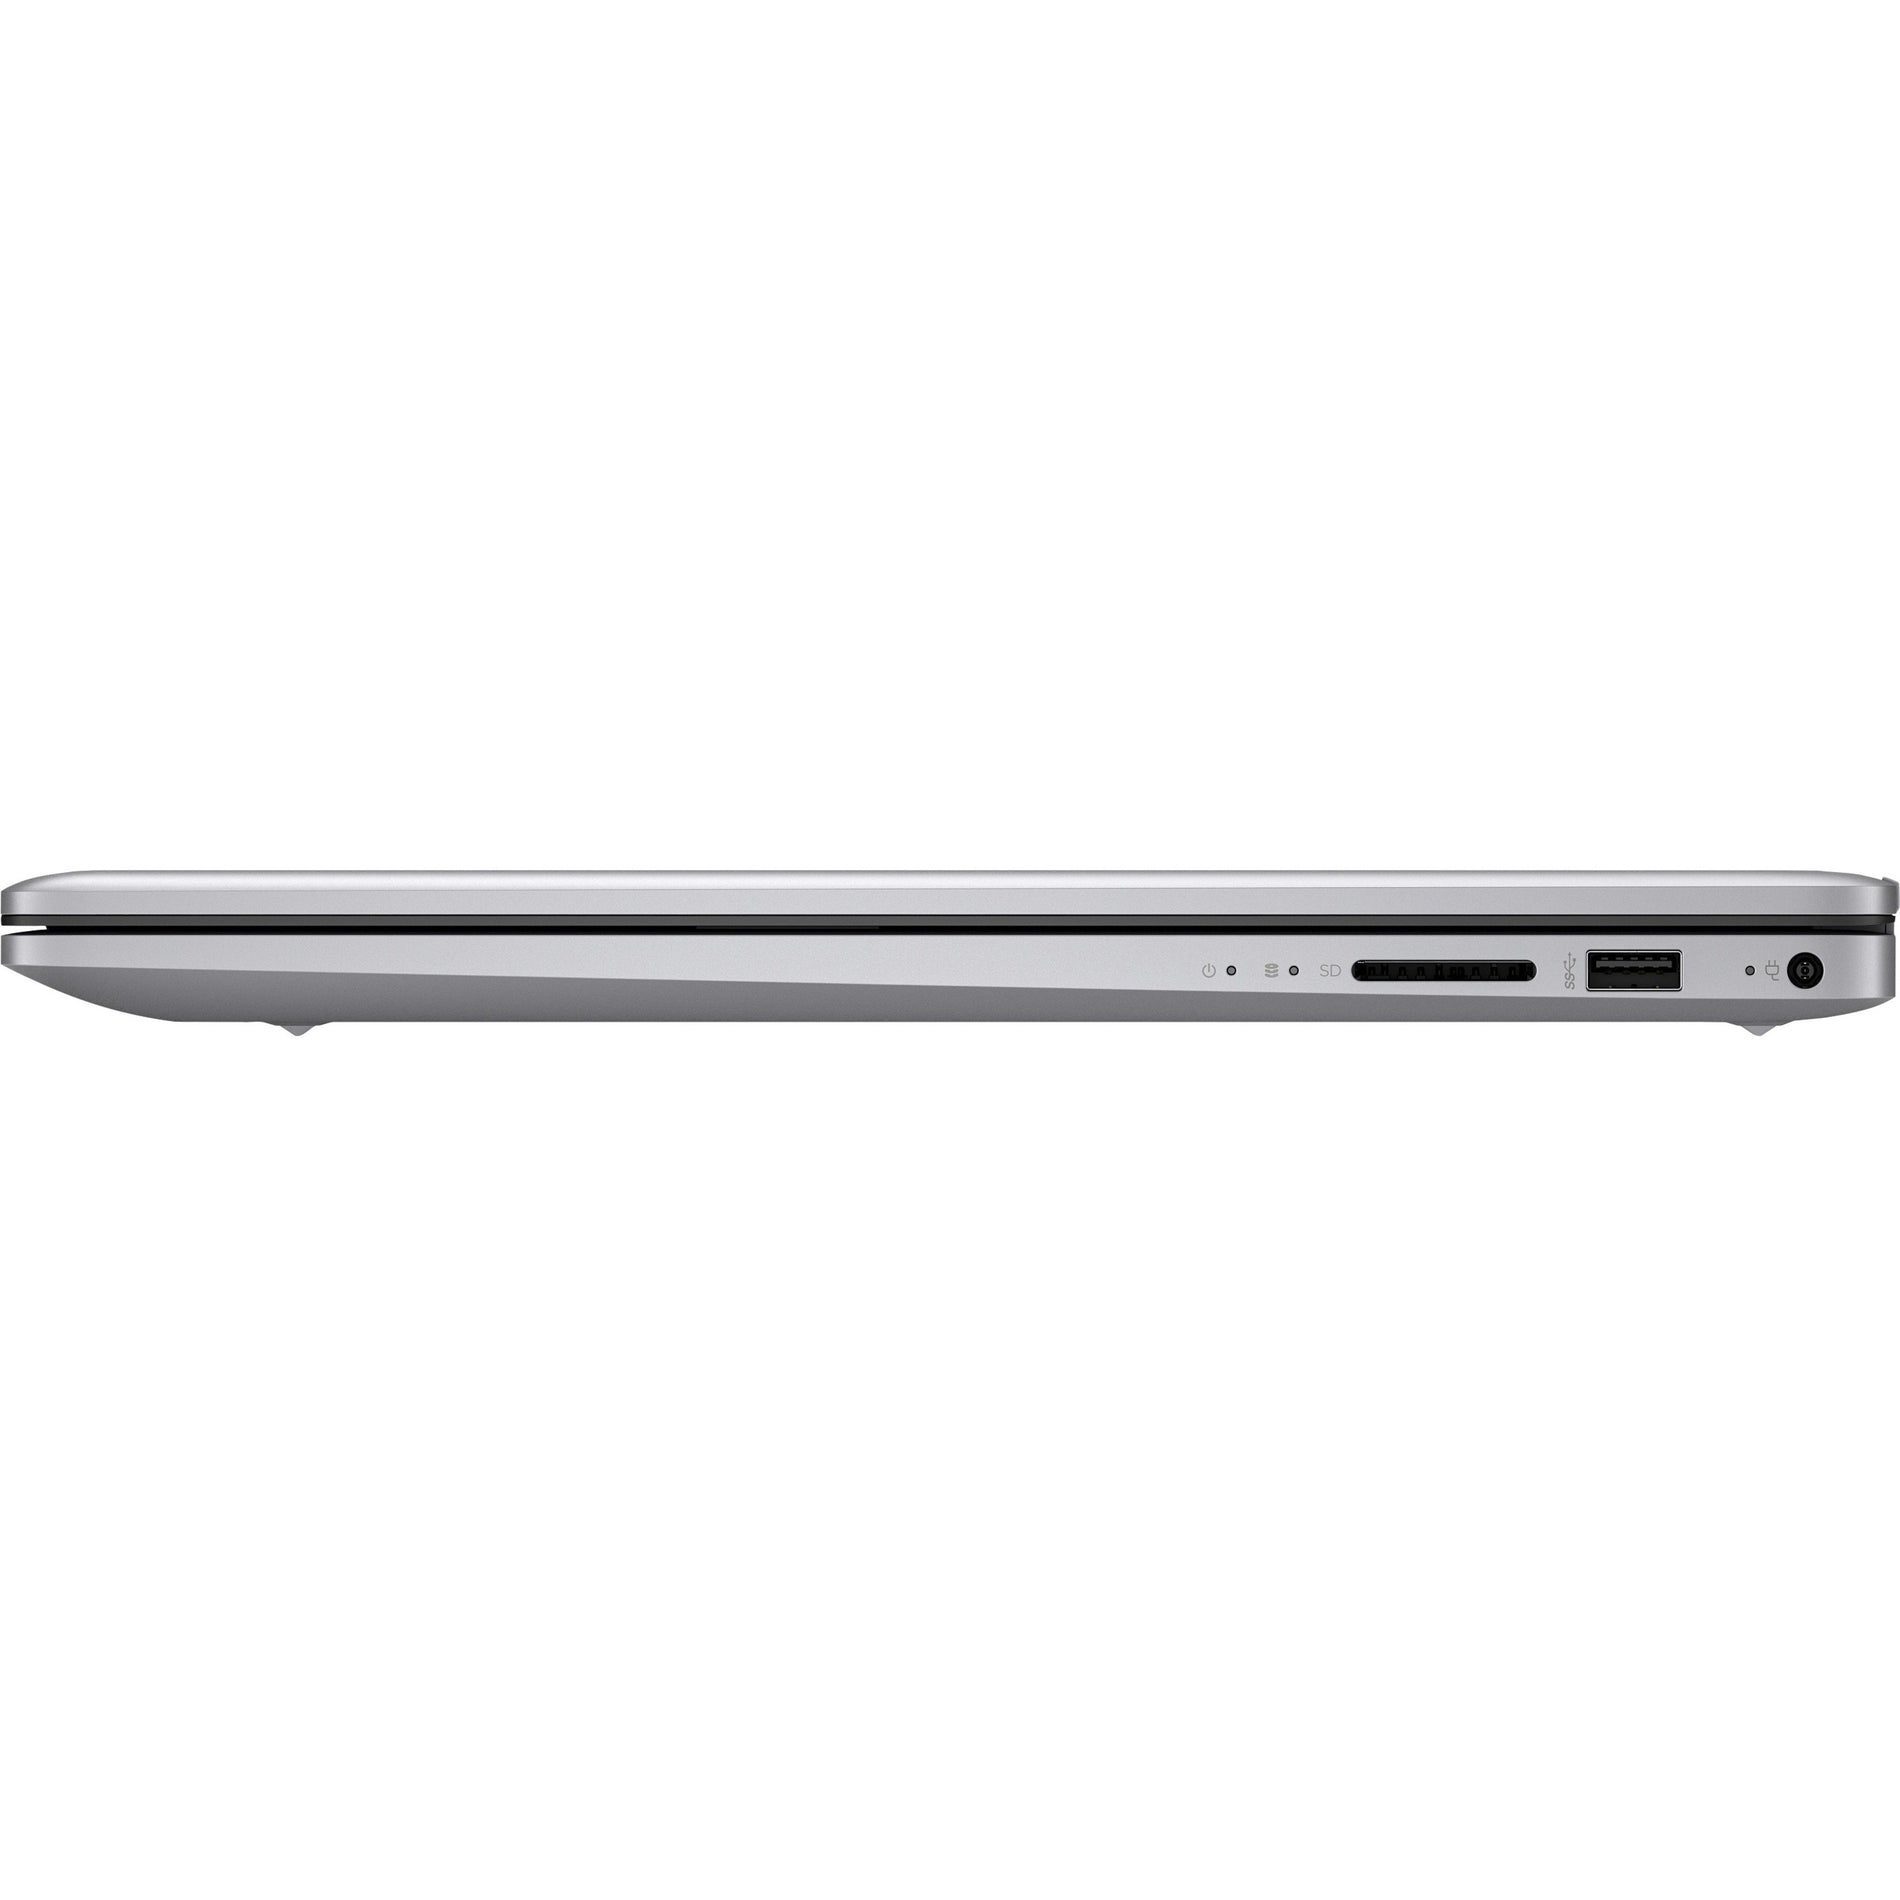 HP 470 G9 17.3" Notebook, Intel Core i5 12th Gen, 8GB RAM, 256GB SSD, Silver [Discontinued]